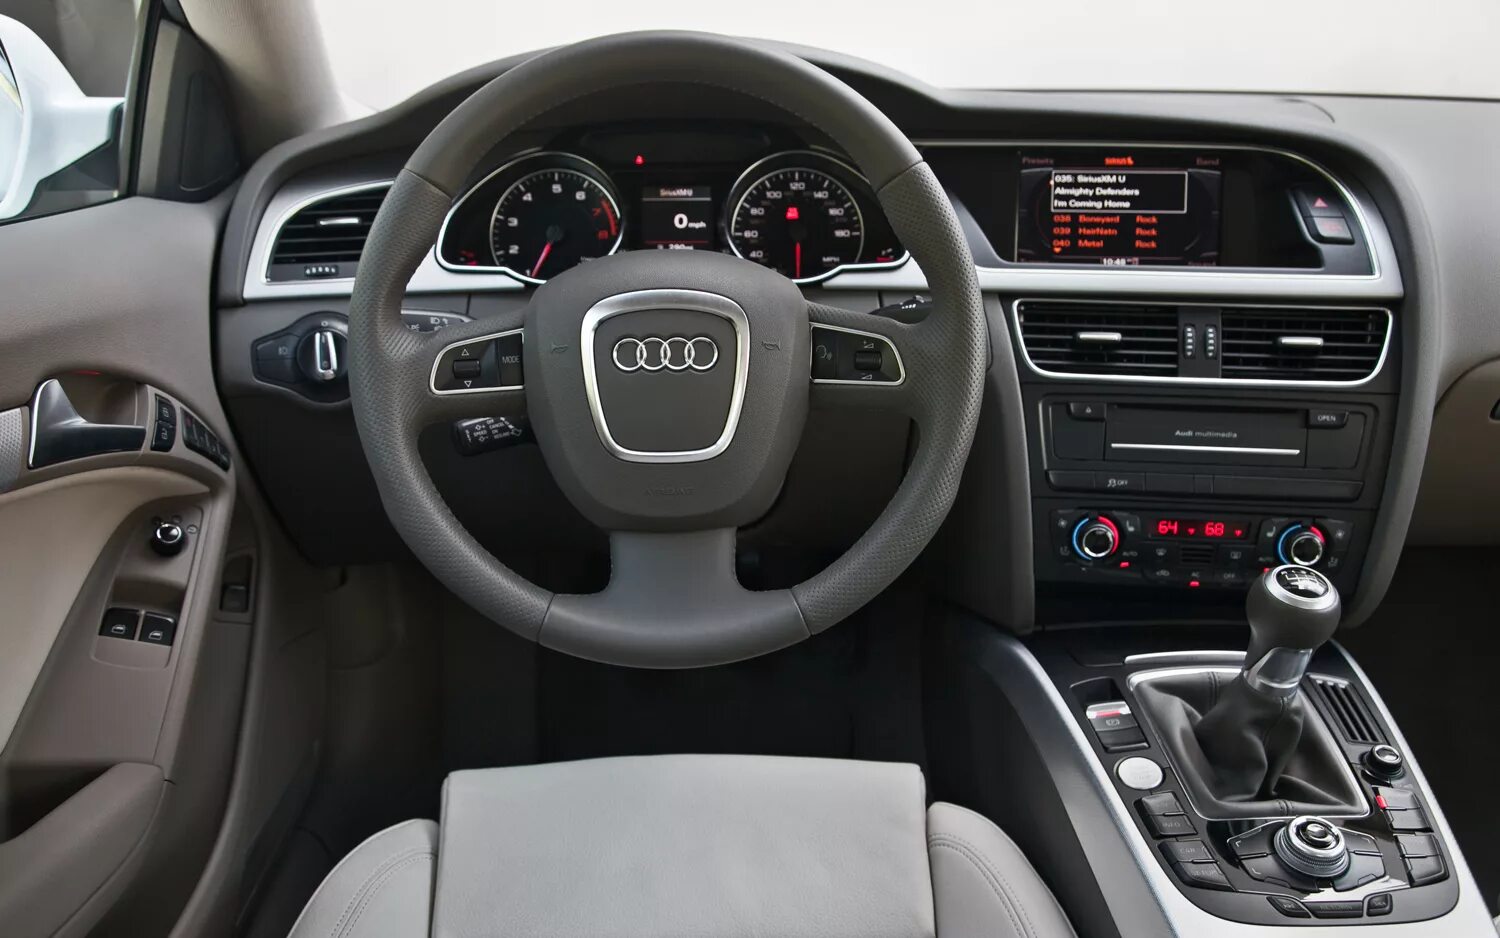 Купить ауди автомат. Audi a5 Interior 2012. Ауди а5 салон. Audi a5 Coupe 2012 Interior. Ауди а5 2010 салон.